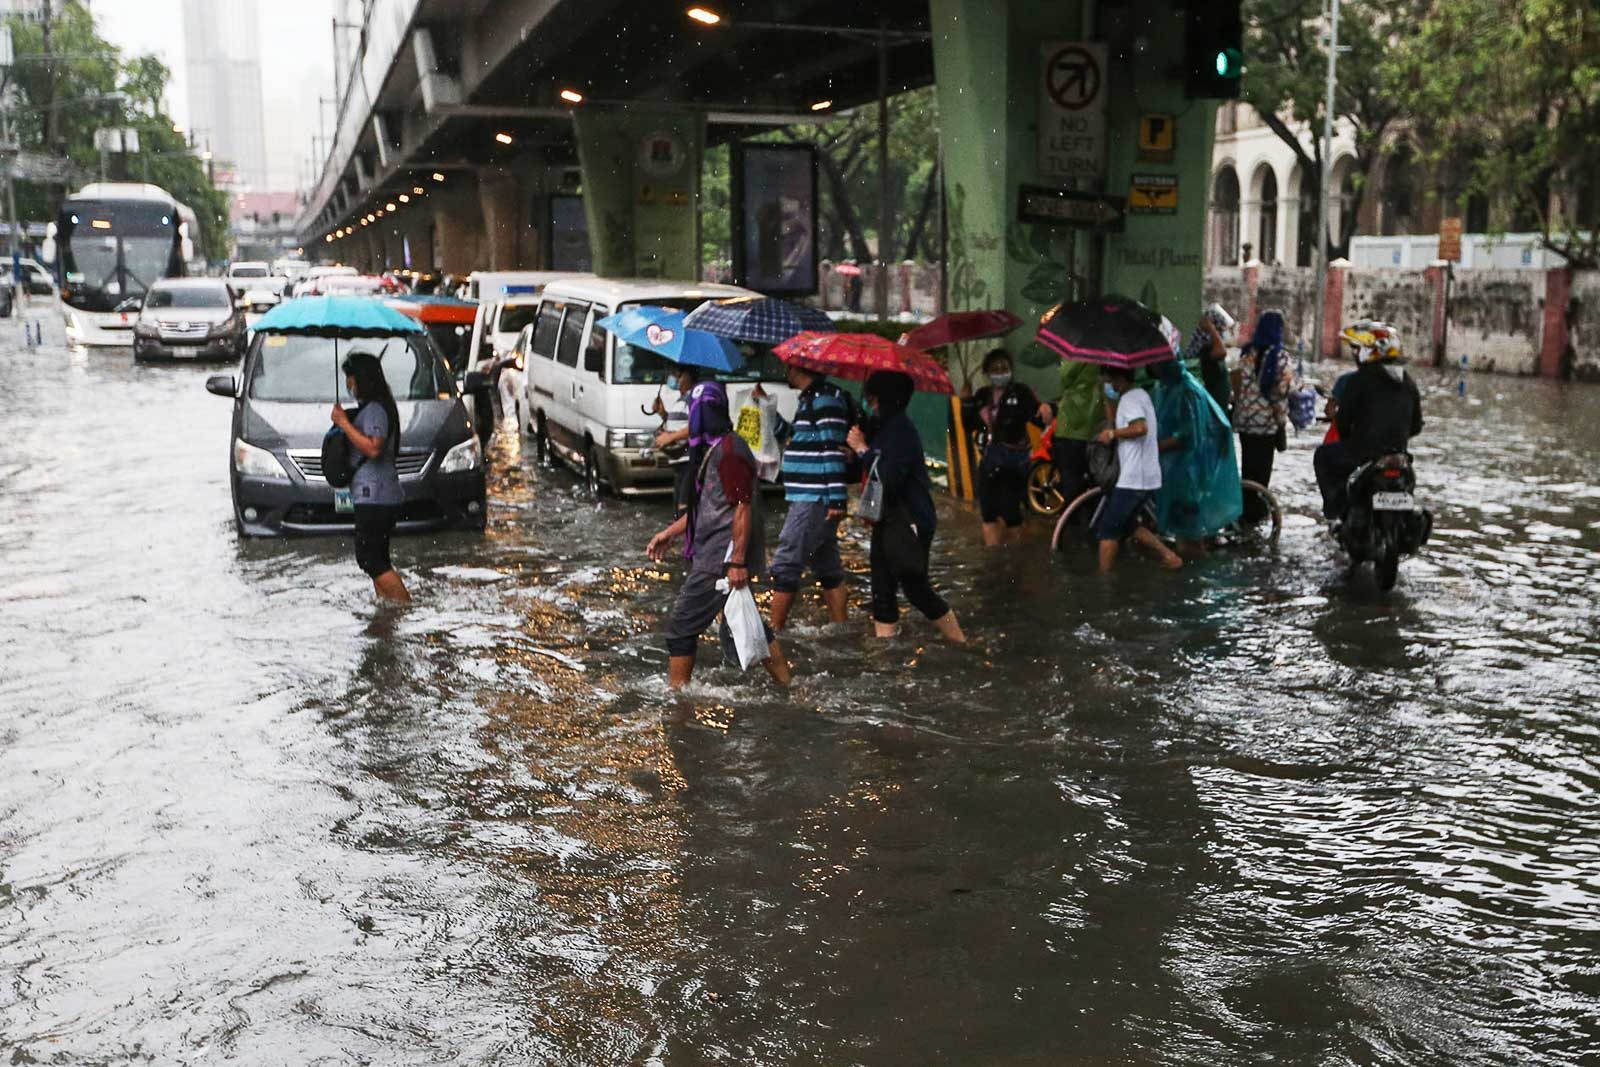 La Niña begins, southwest monsoon ends in Philippines